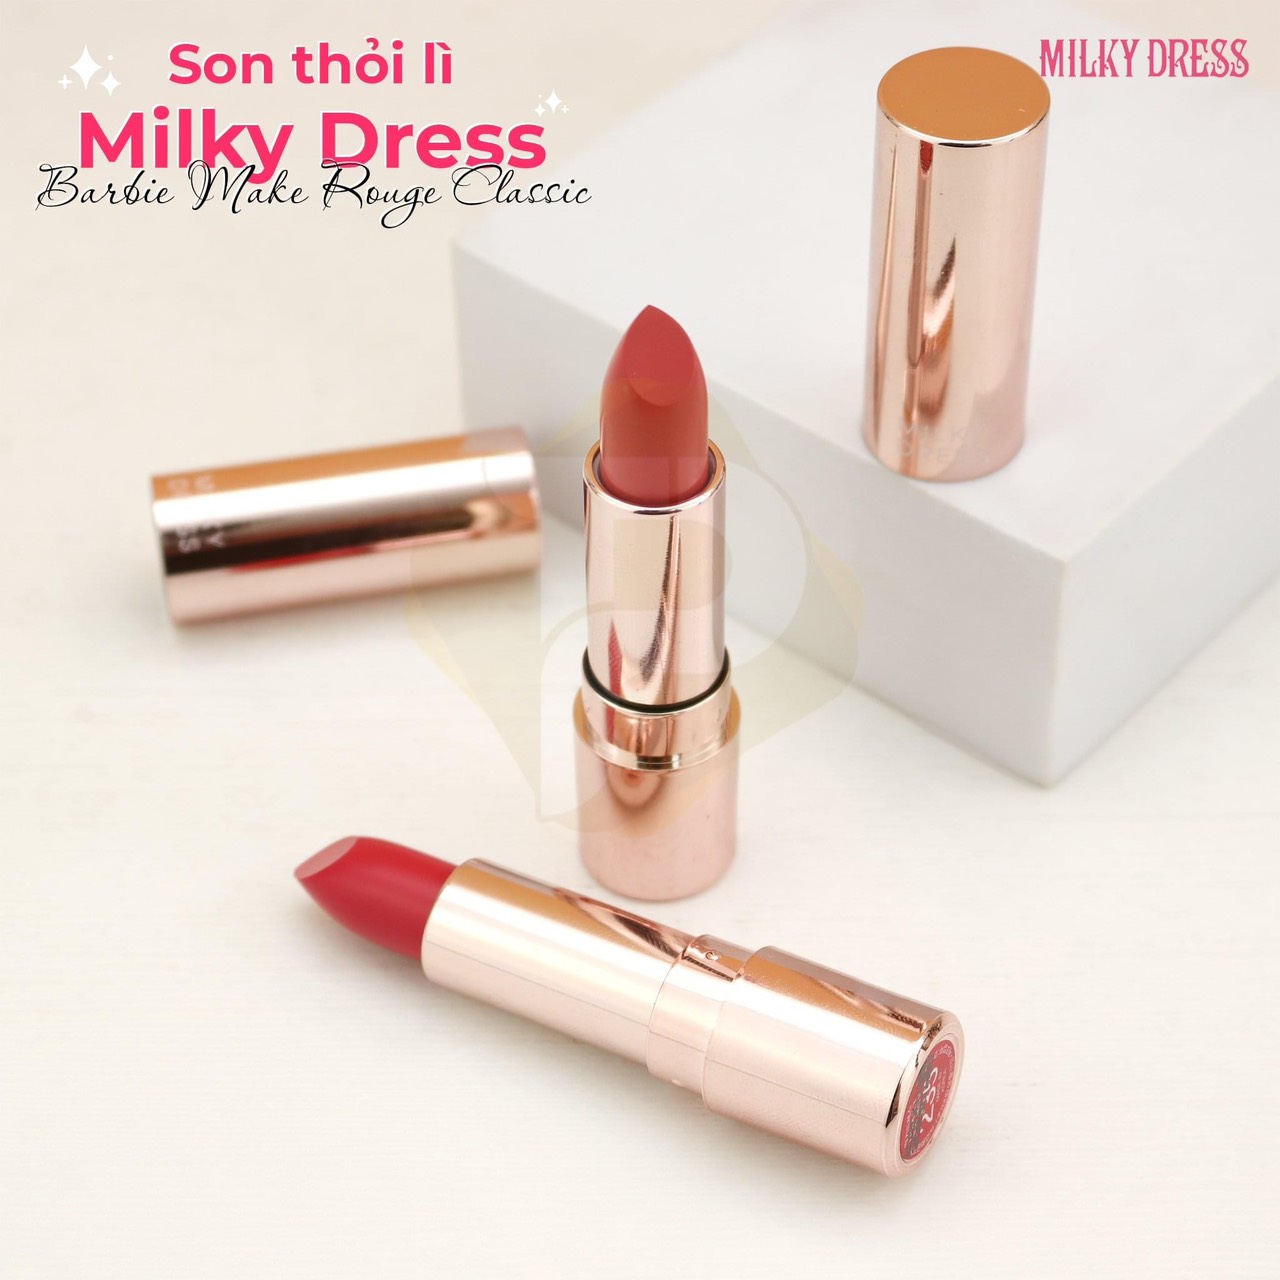 Milky Dress - Son lì Barbie Make Rouge Classic M214